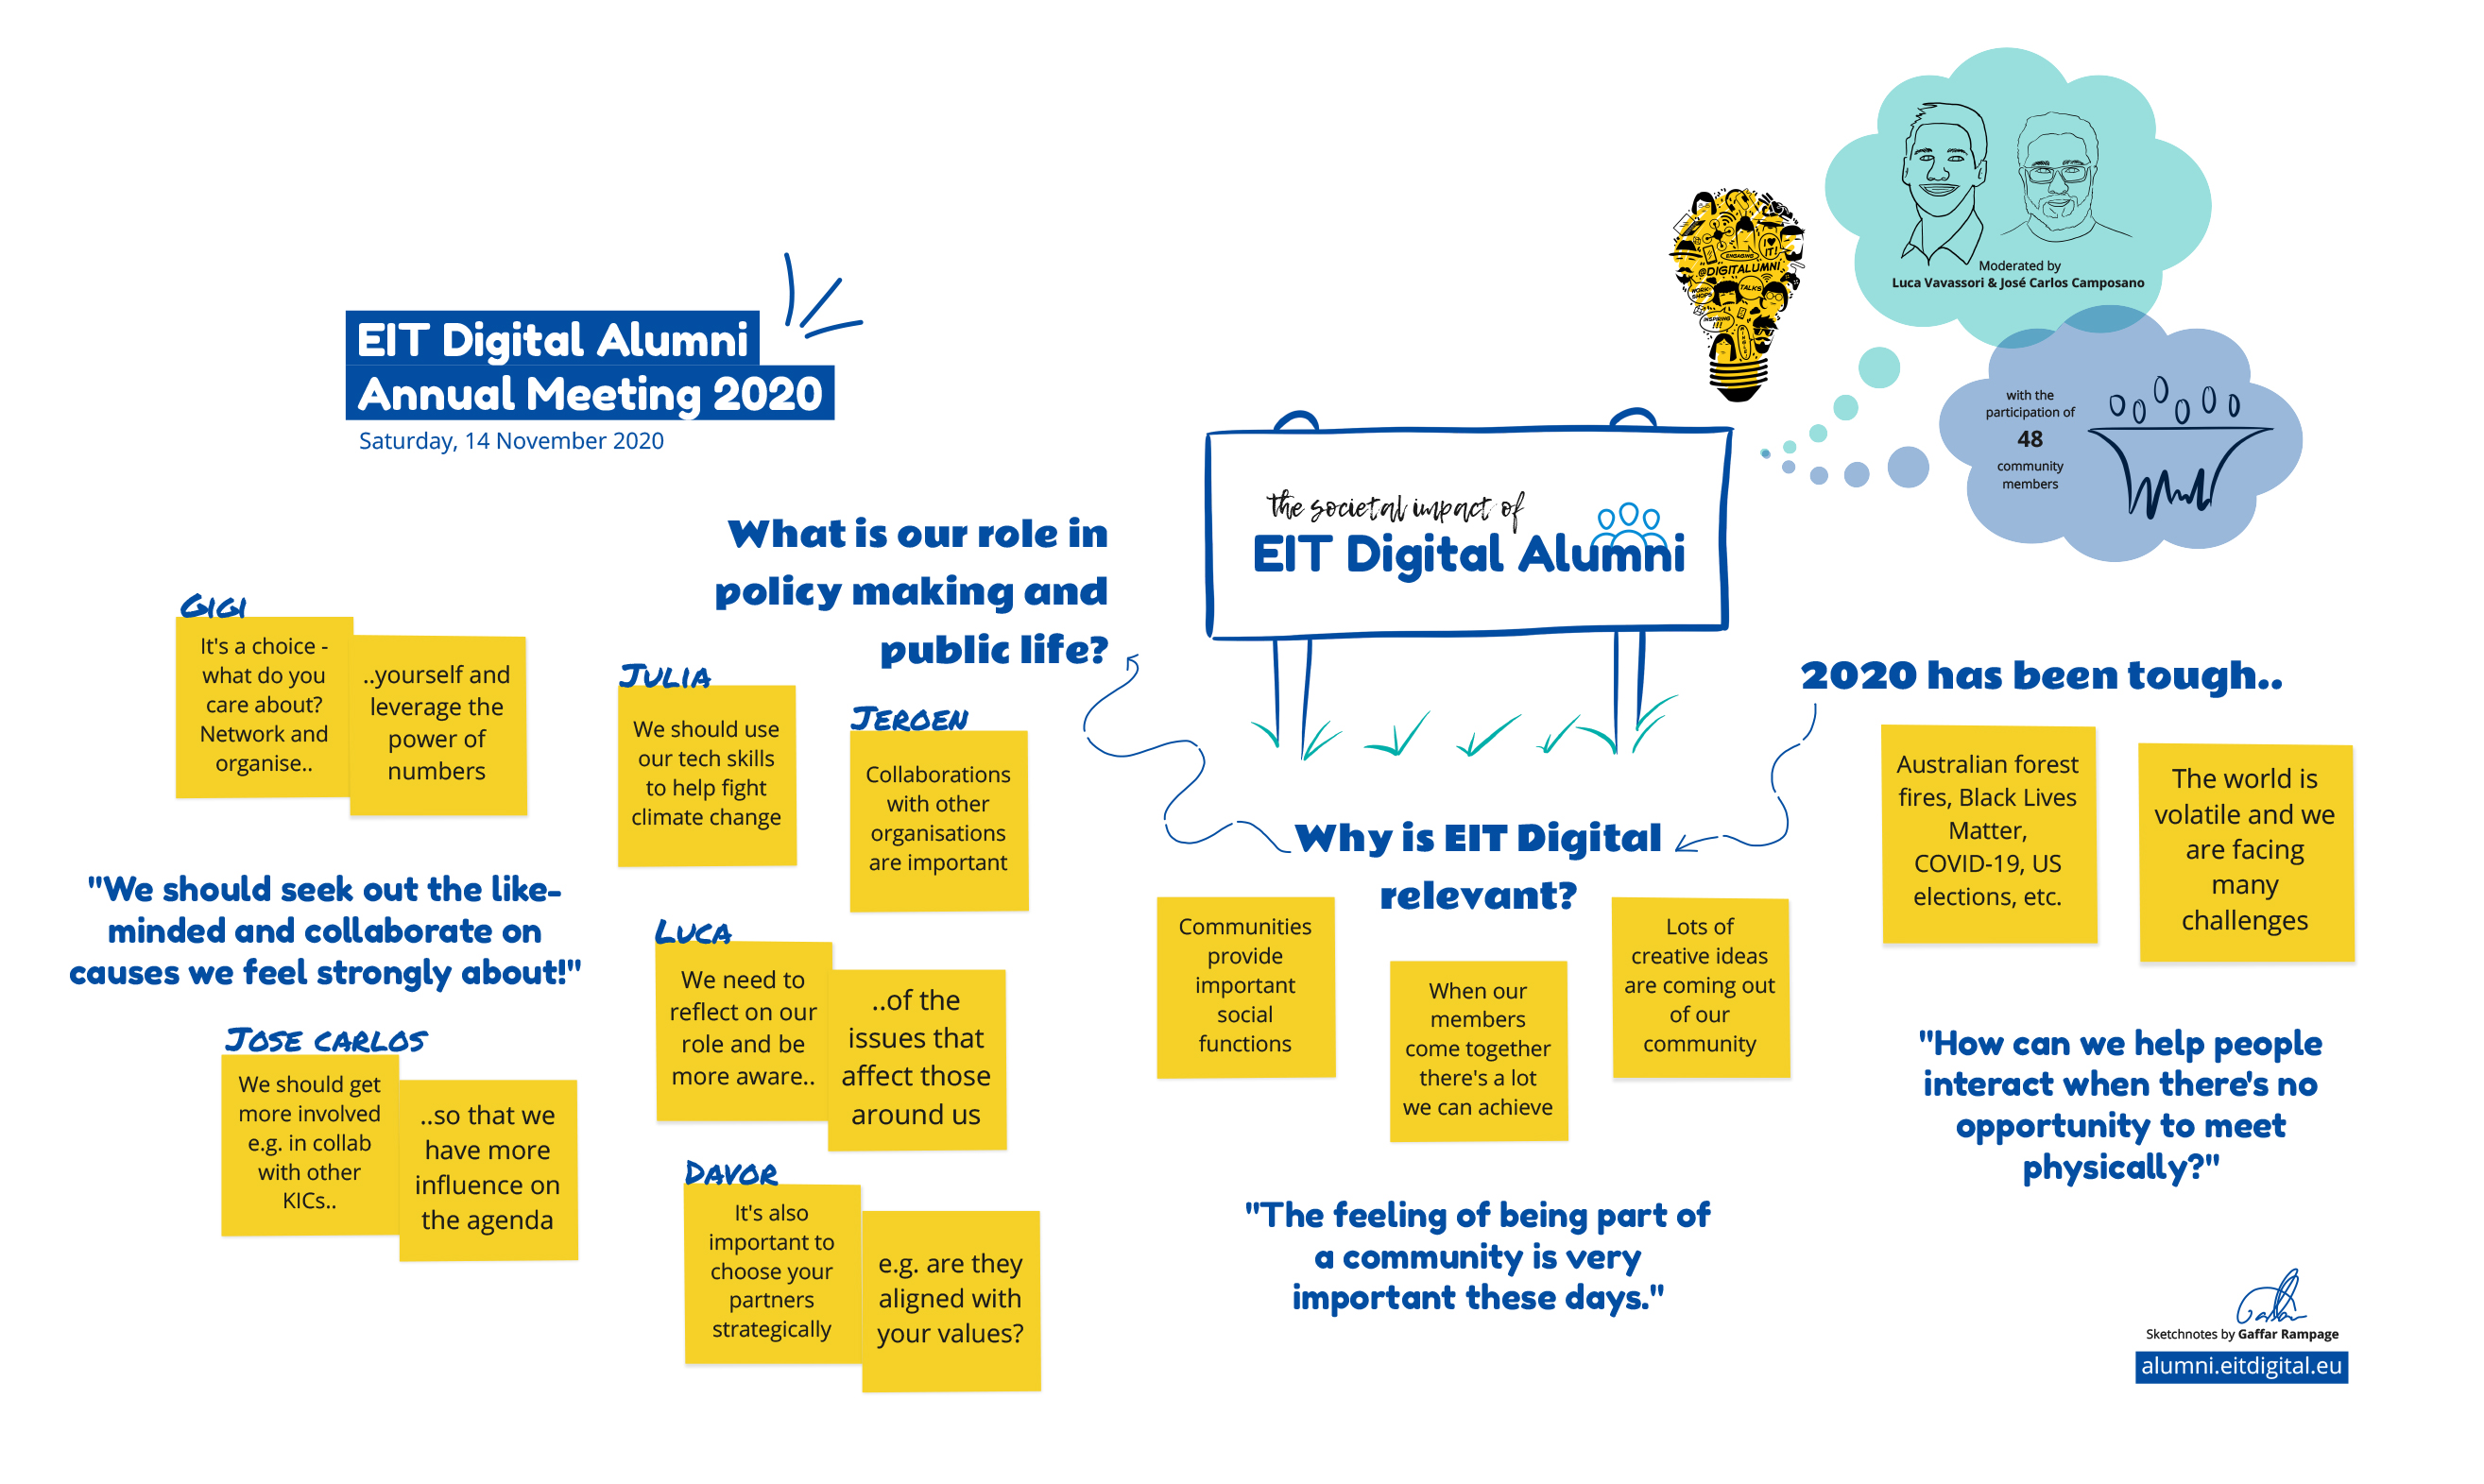 EIT Digital Alumni Annual Meeting 2020 - Societal Impact